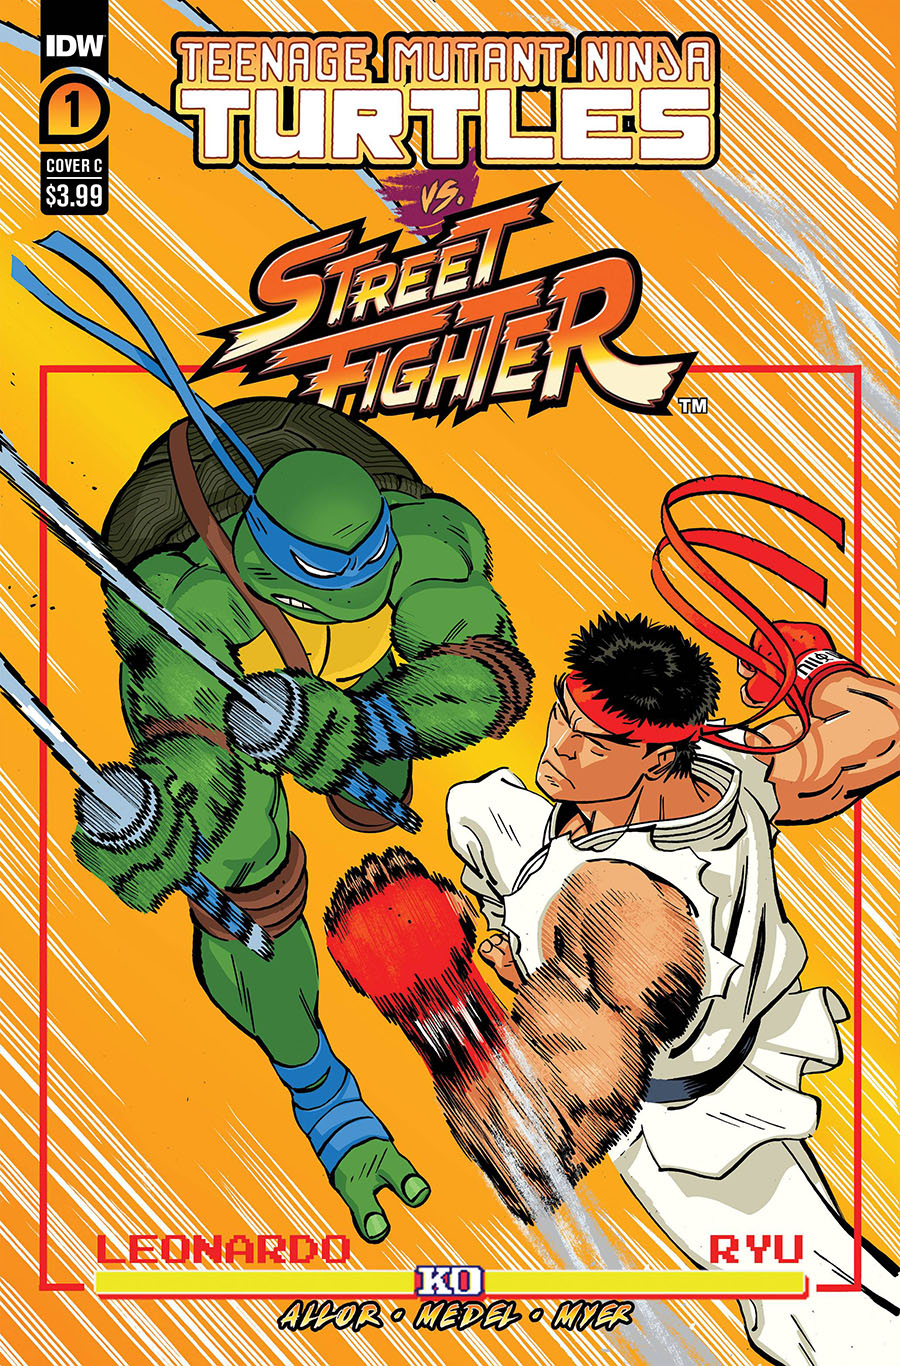 Teenage Mutant Ninja Turtles vs Street Fighter #1 Cover C Variant Tom Reilly Cover